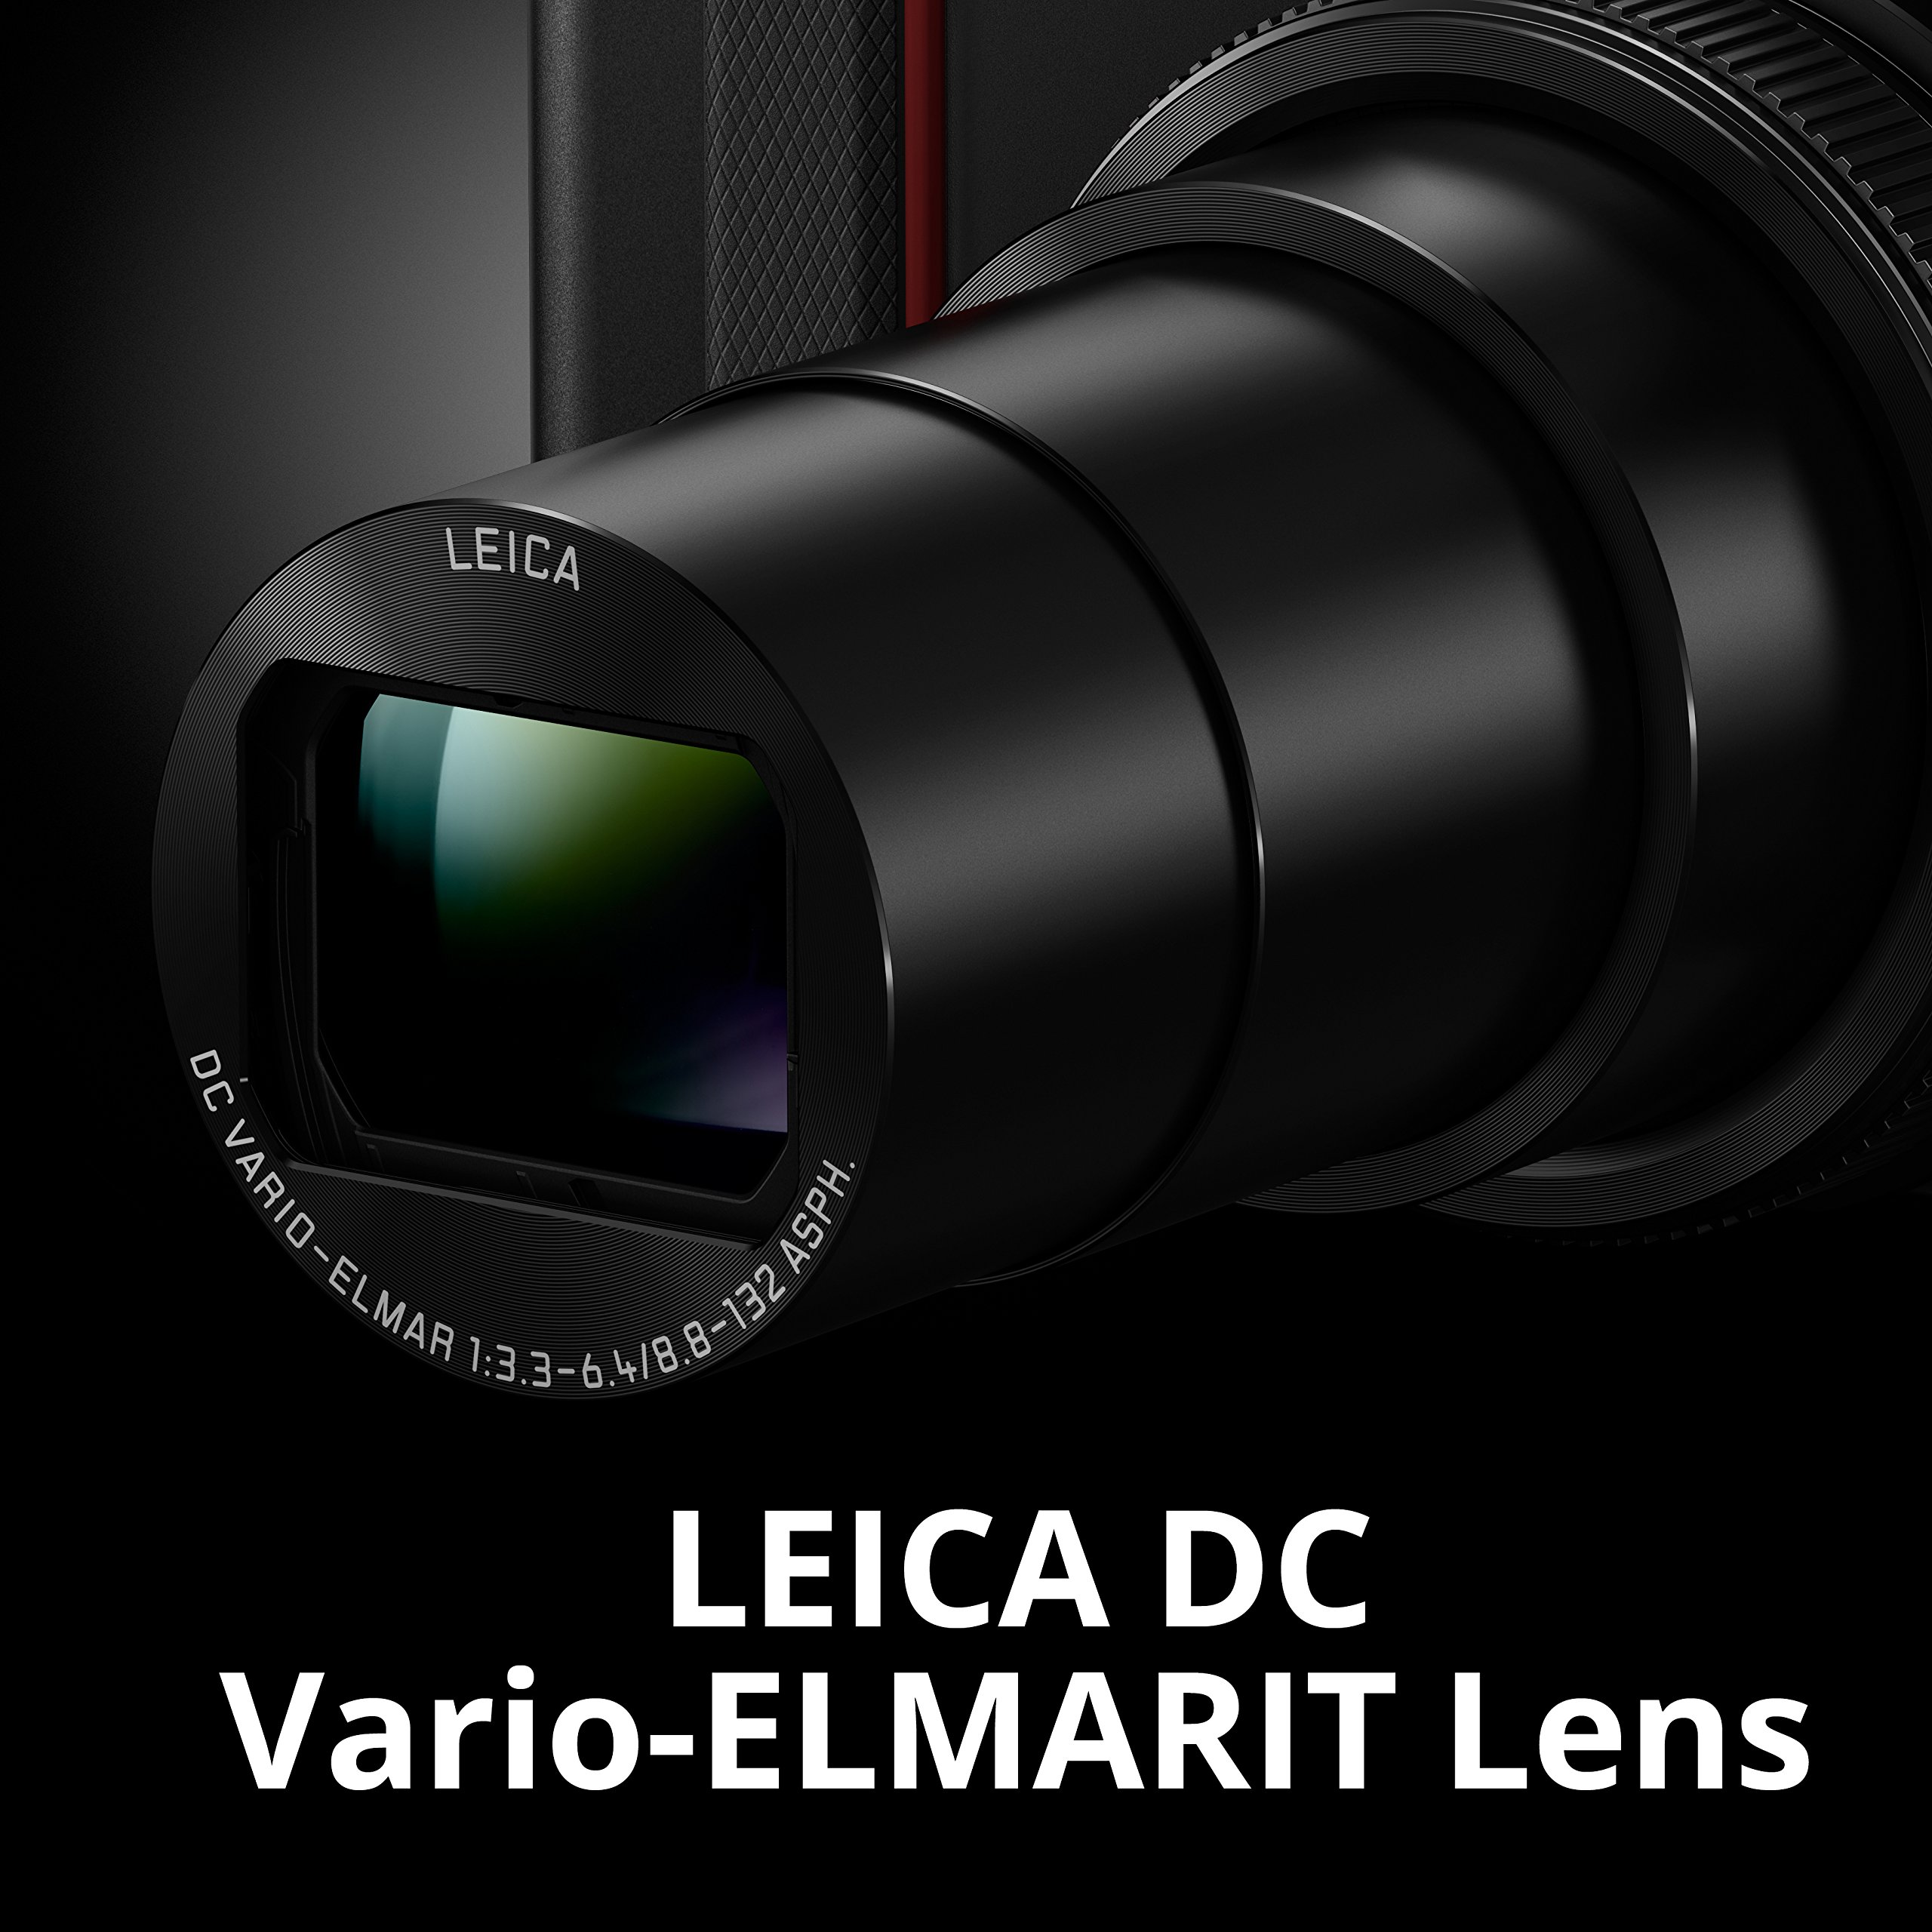 PANASONIC LUMIX ZS200 15X Leica DC Lens with Stabilization, 20.1 Megapixel, Large 1 inch Low Light Sensor (DC-ZS200S USA Silver)